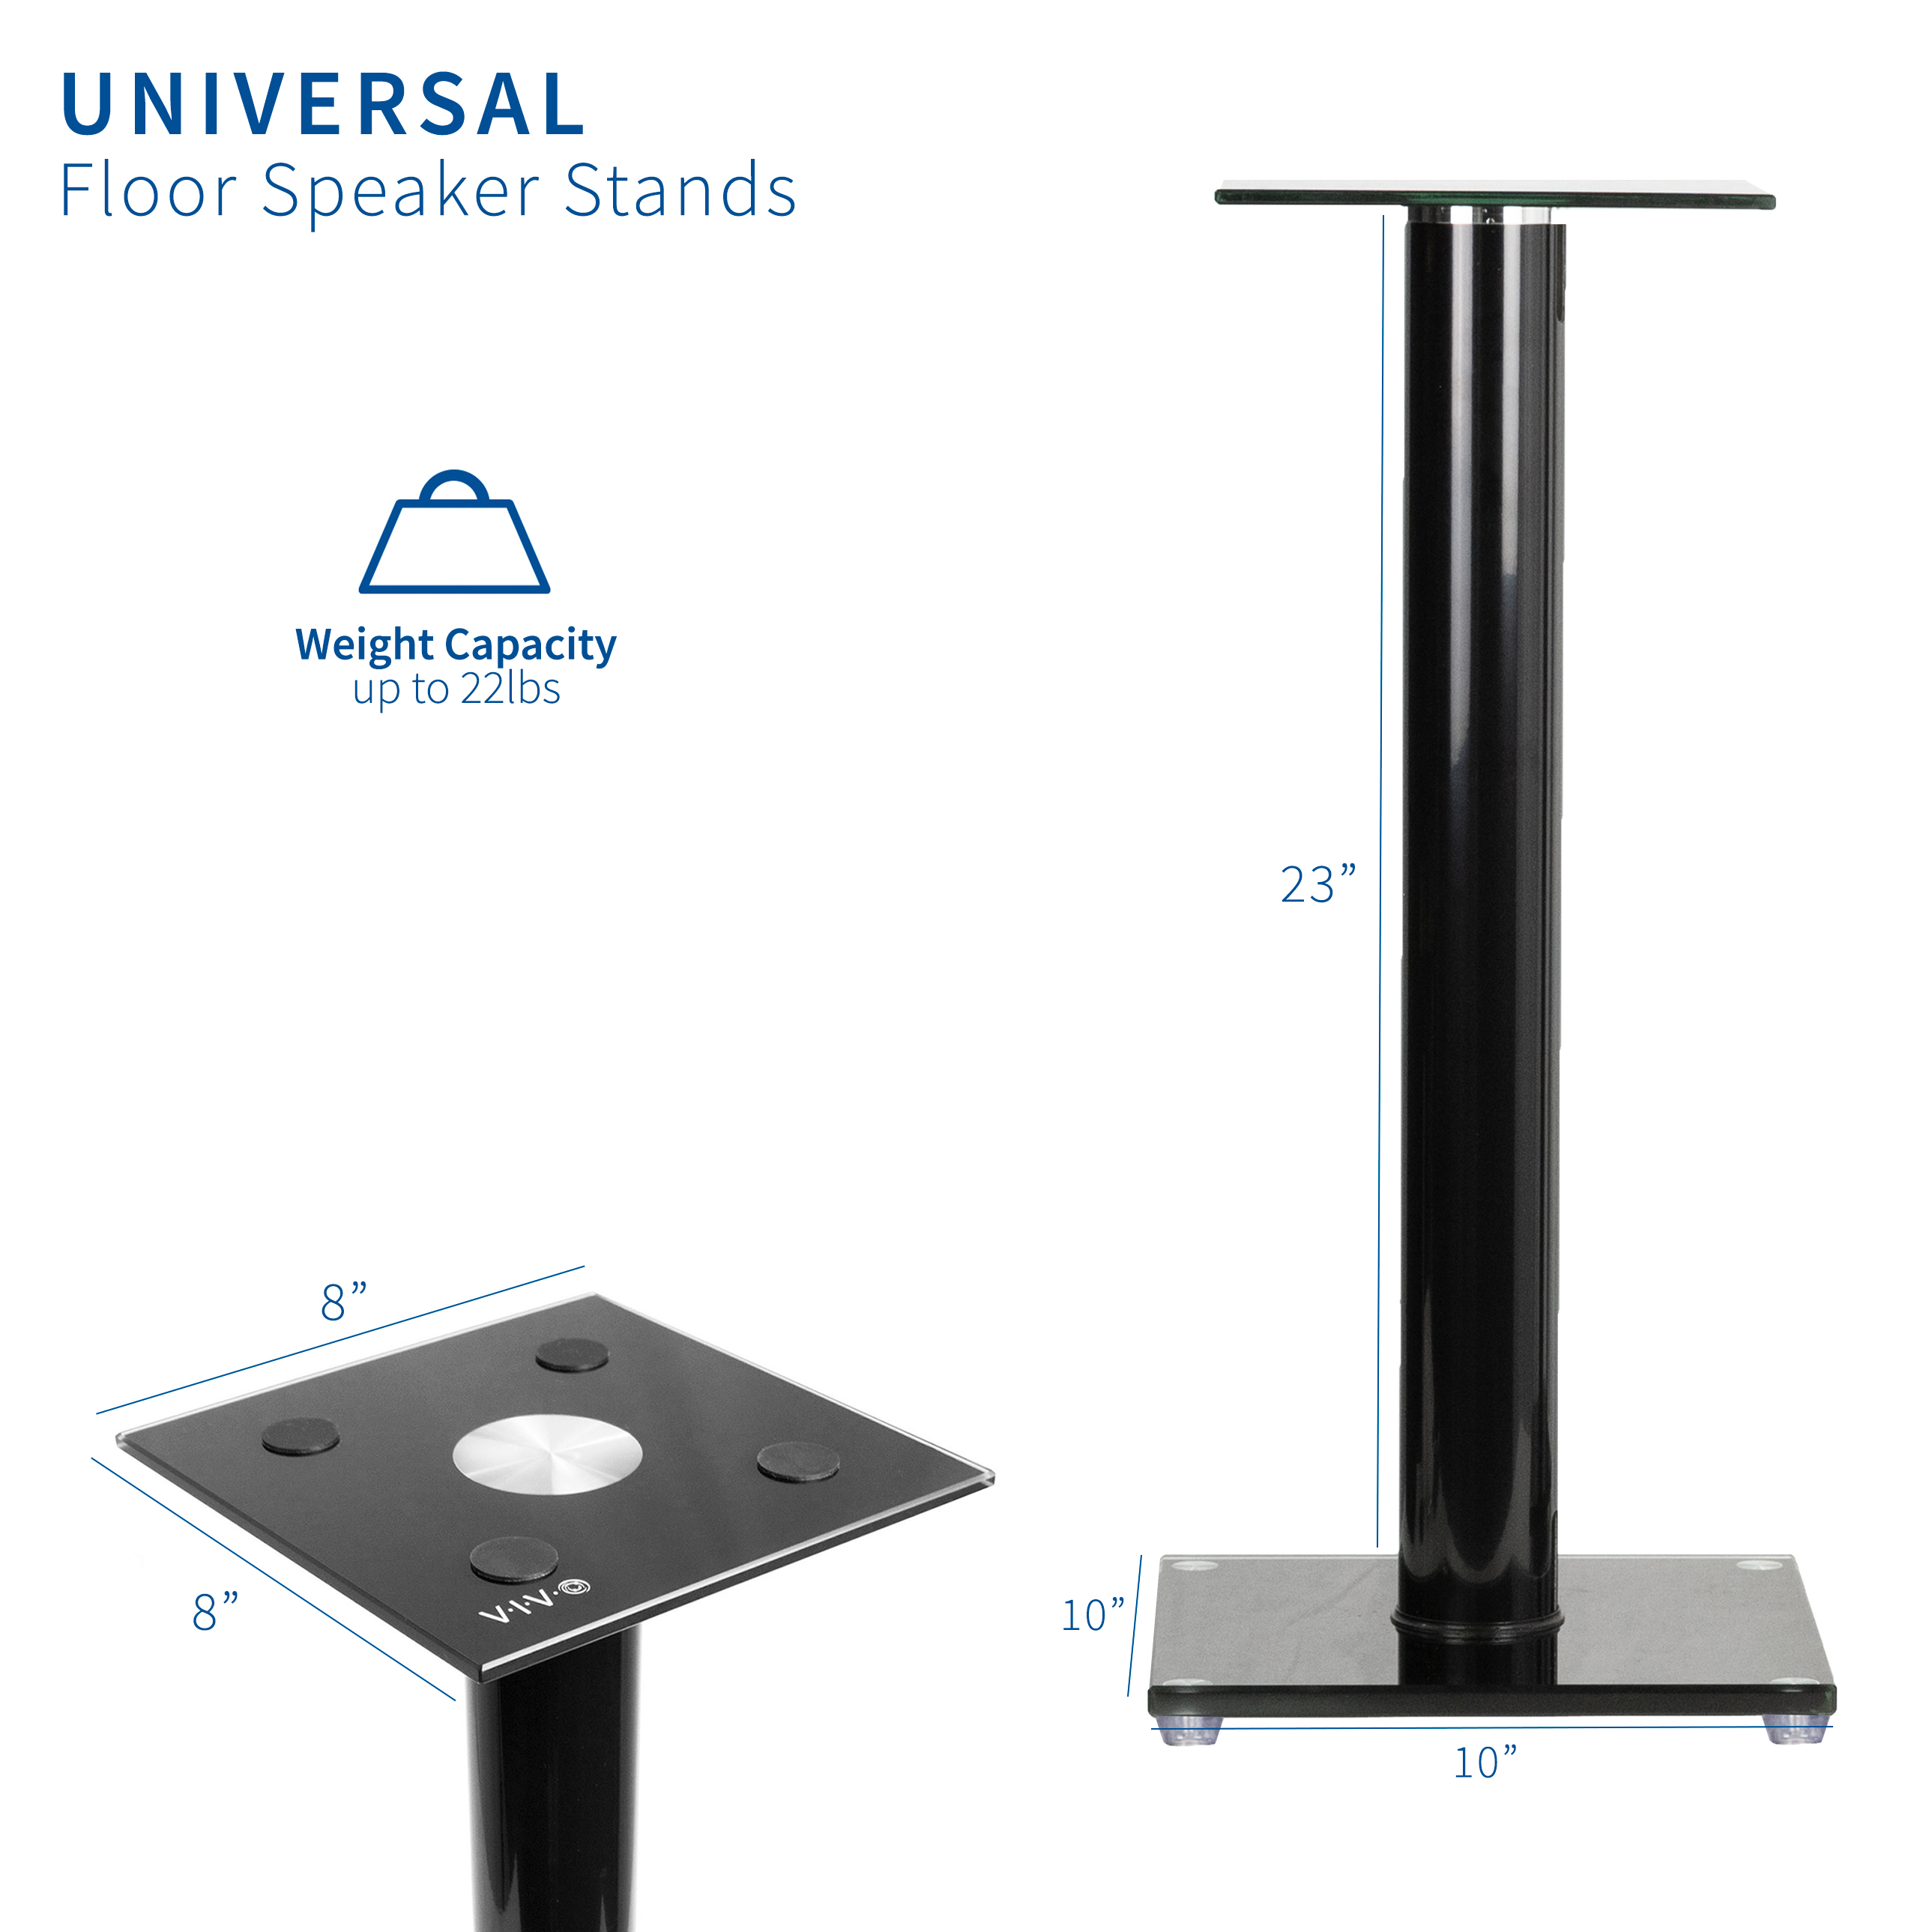 Premium Universal Floor Speaker Stands for Surround Sound & Book Shelf Speakers - image 2 of 6